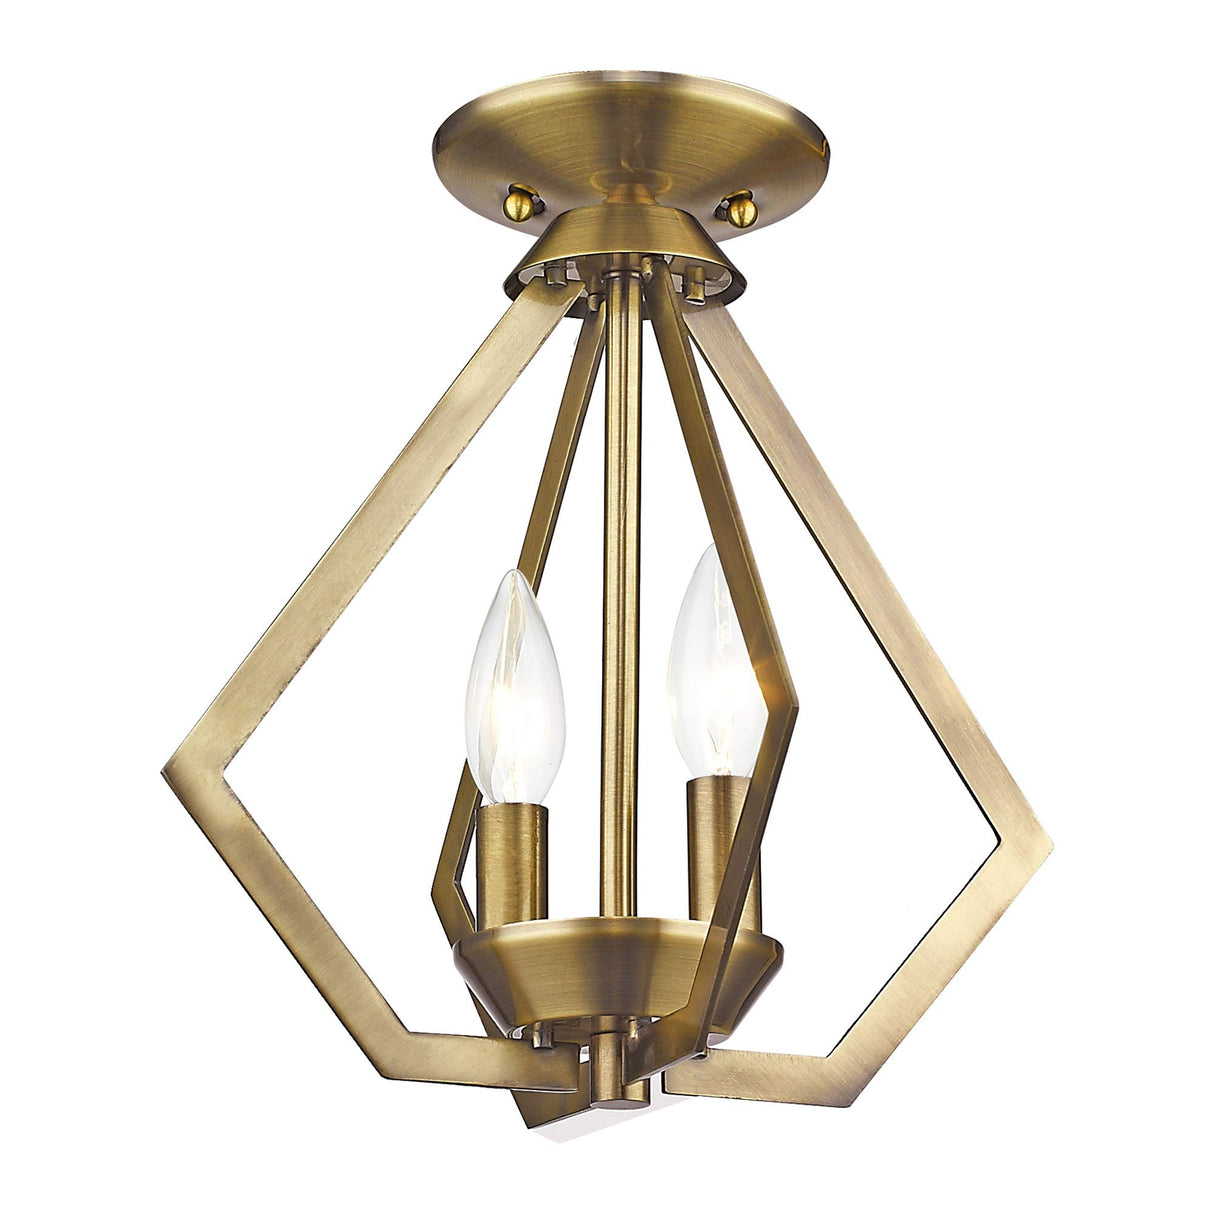 Livex Lighting 40922-01 Prism 2 Light AB Mini Chandelier/Ceiling Mount, 11.25" x 11.25" x 13", Antique Brass